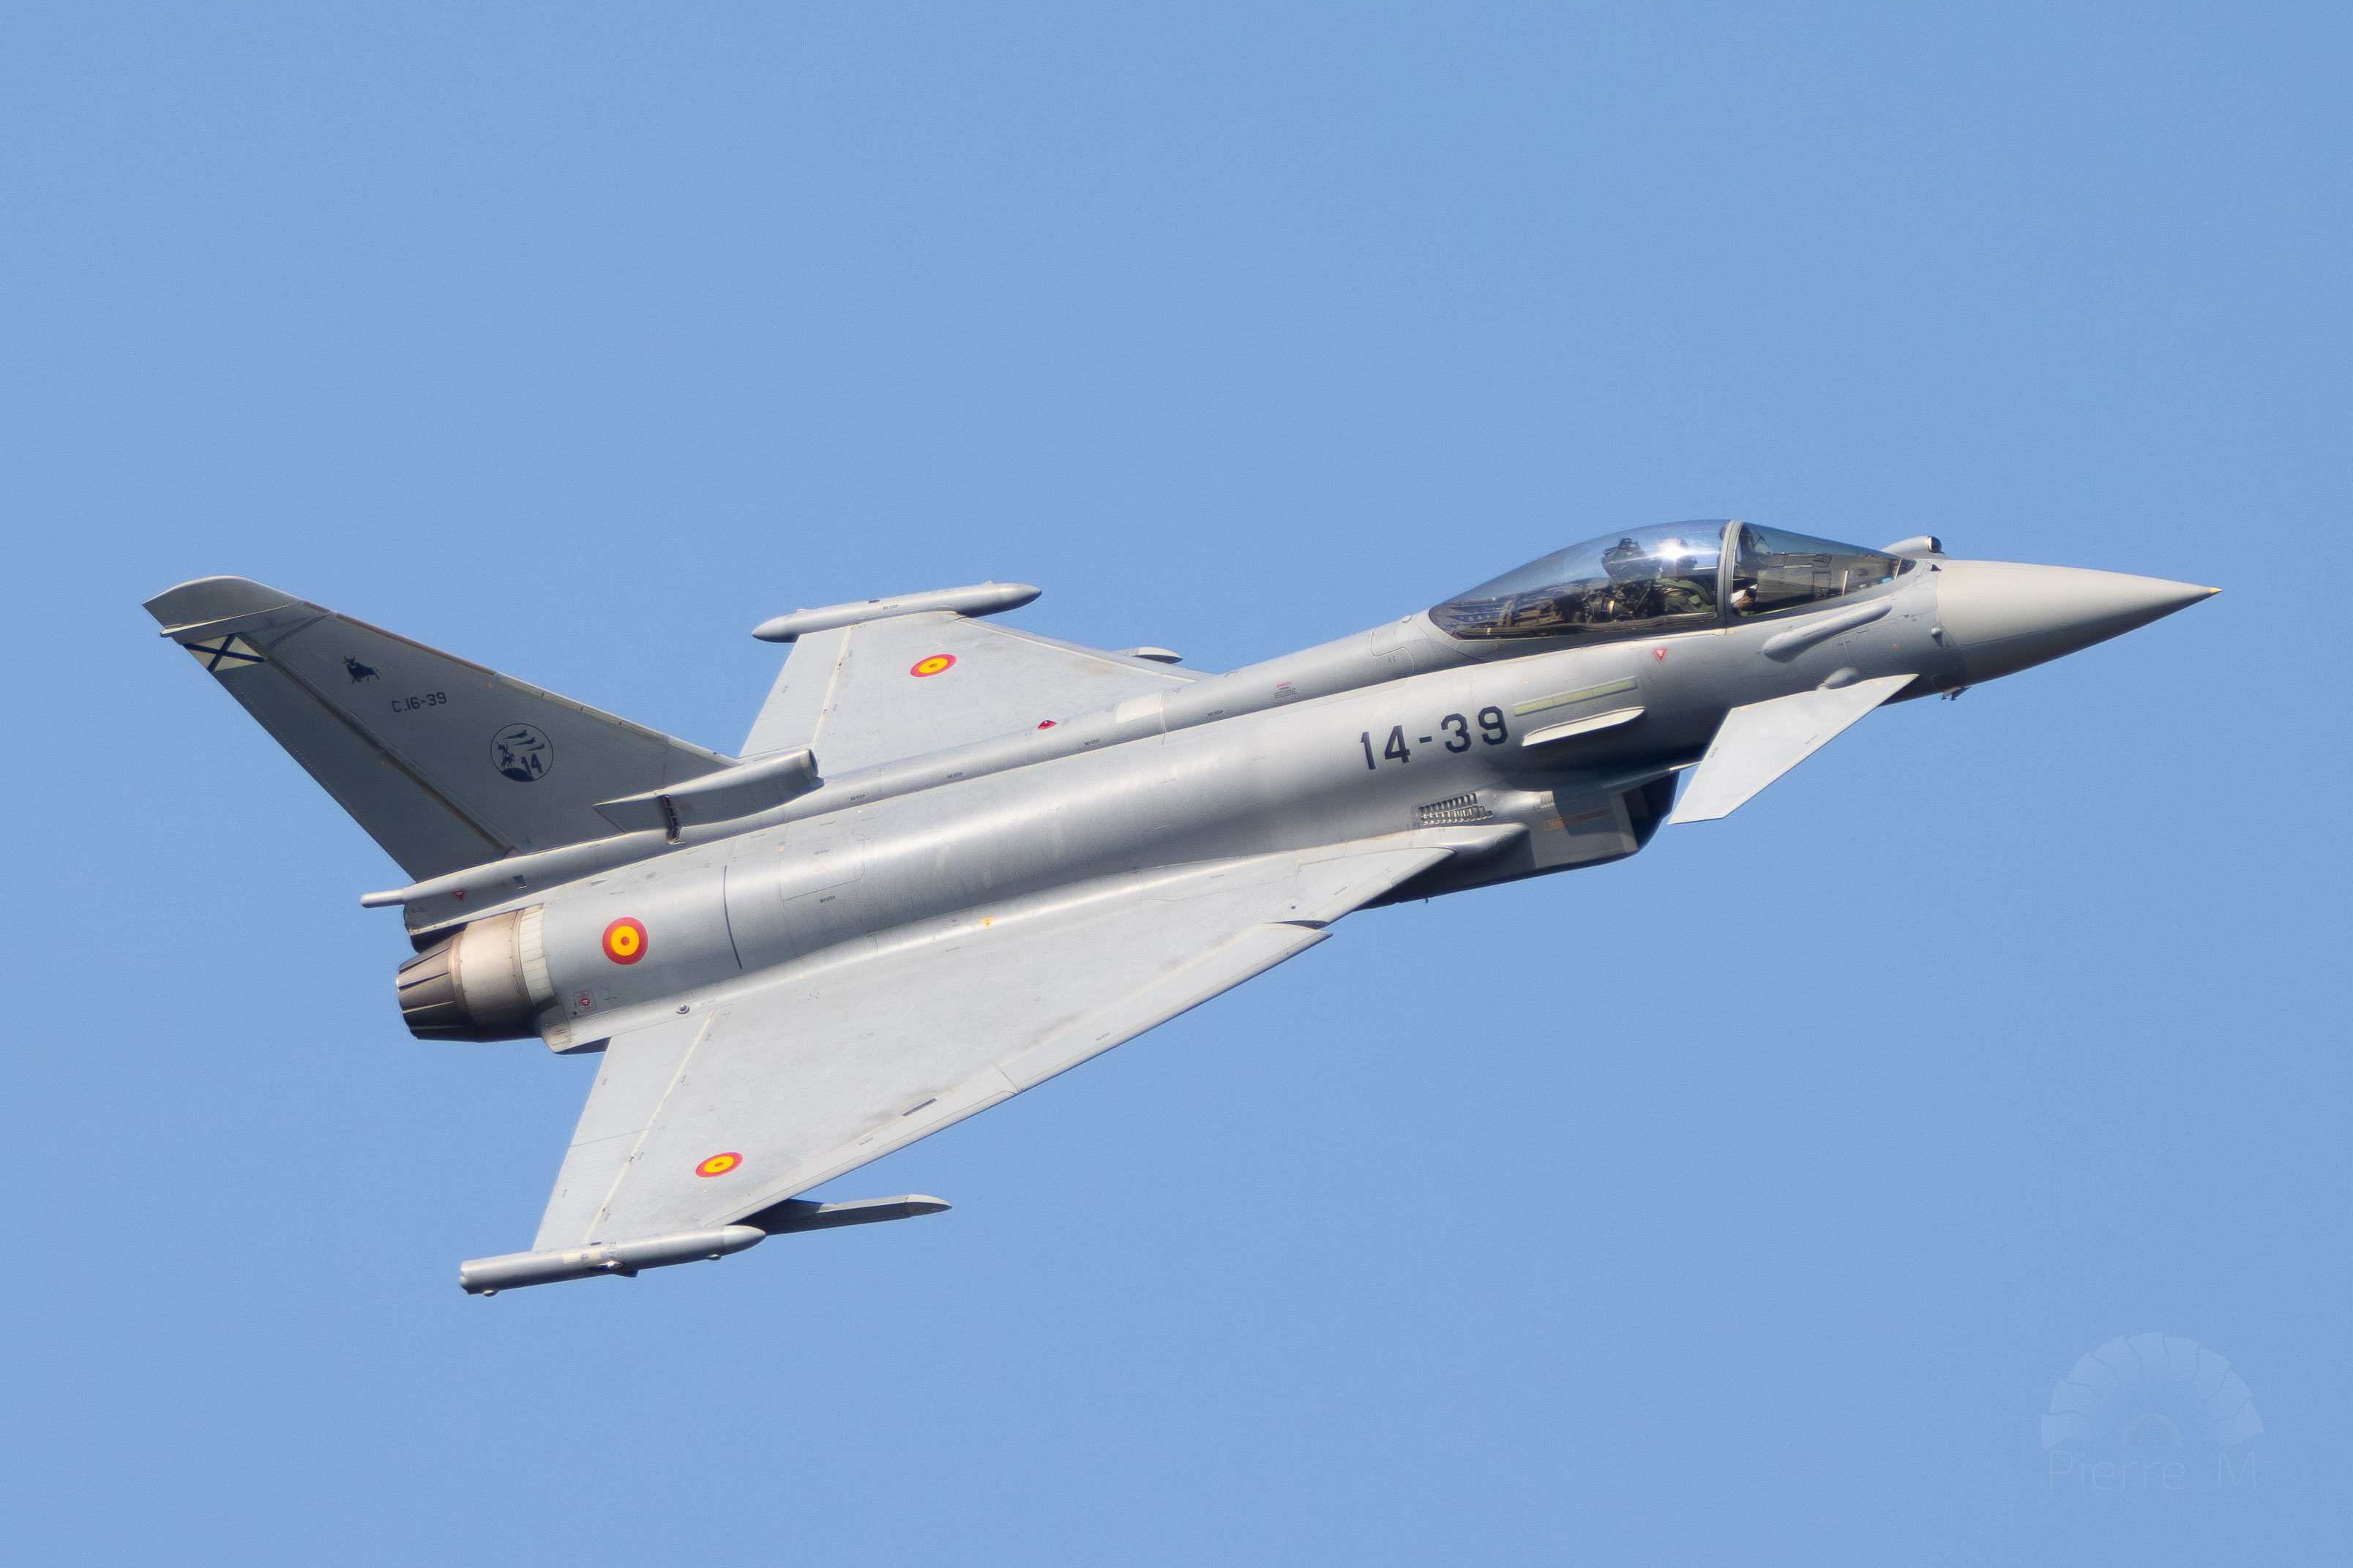 2023 - Belgian Air Force Days 2023 - Kleine Brogel  Tscx